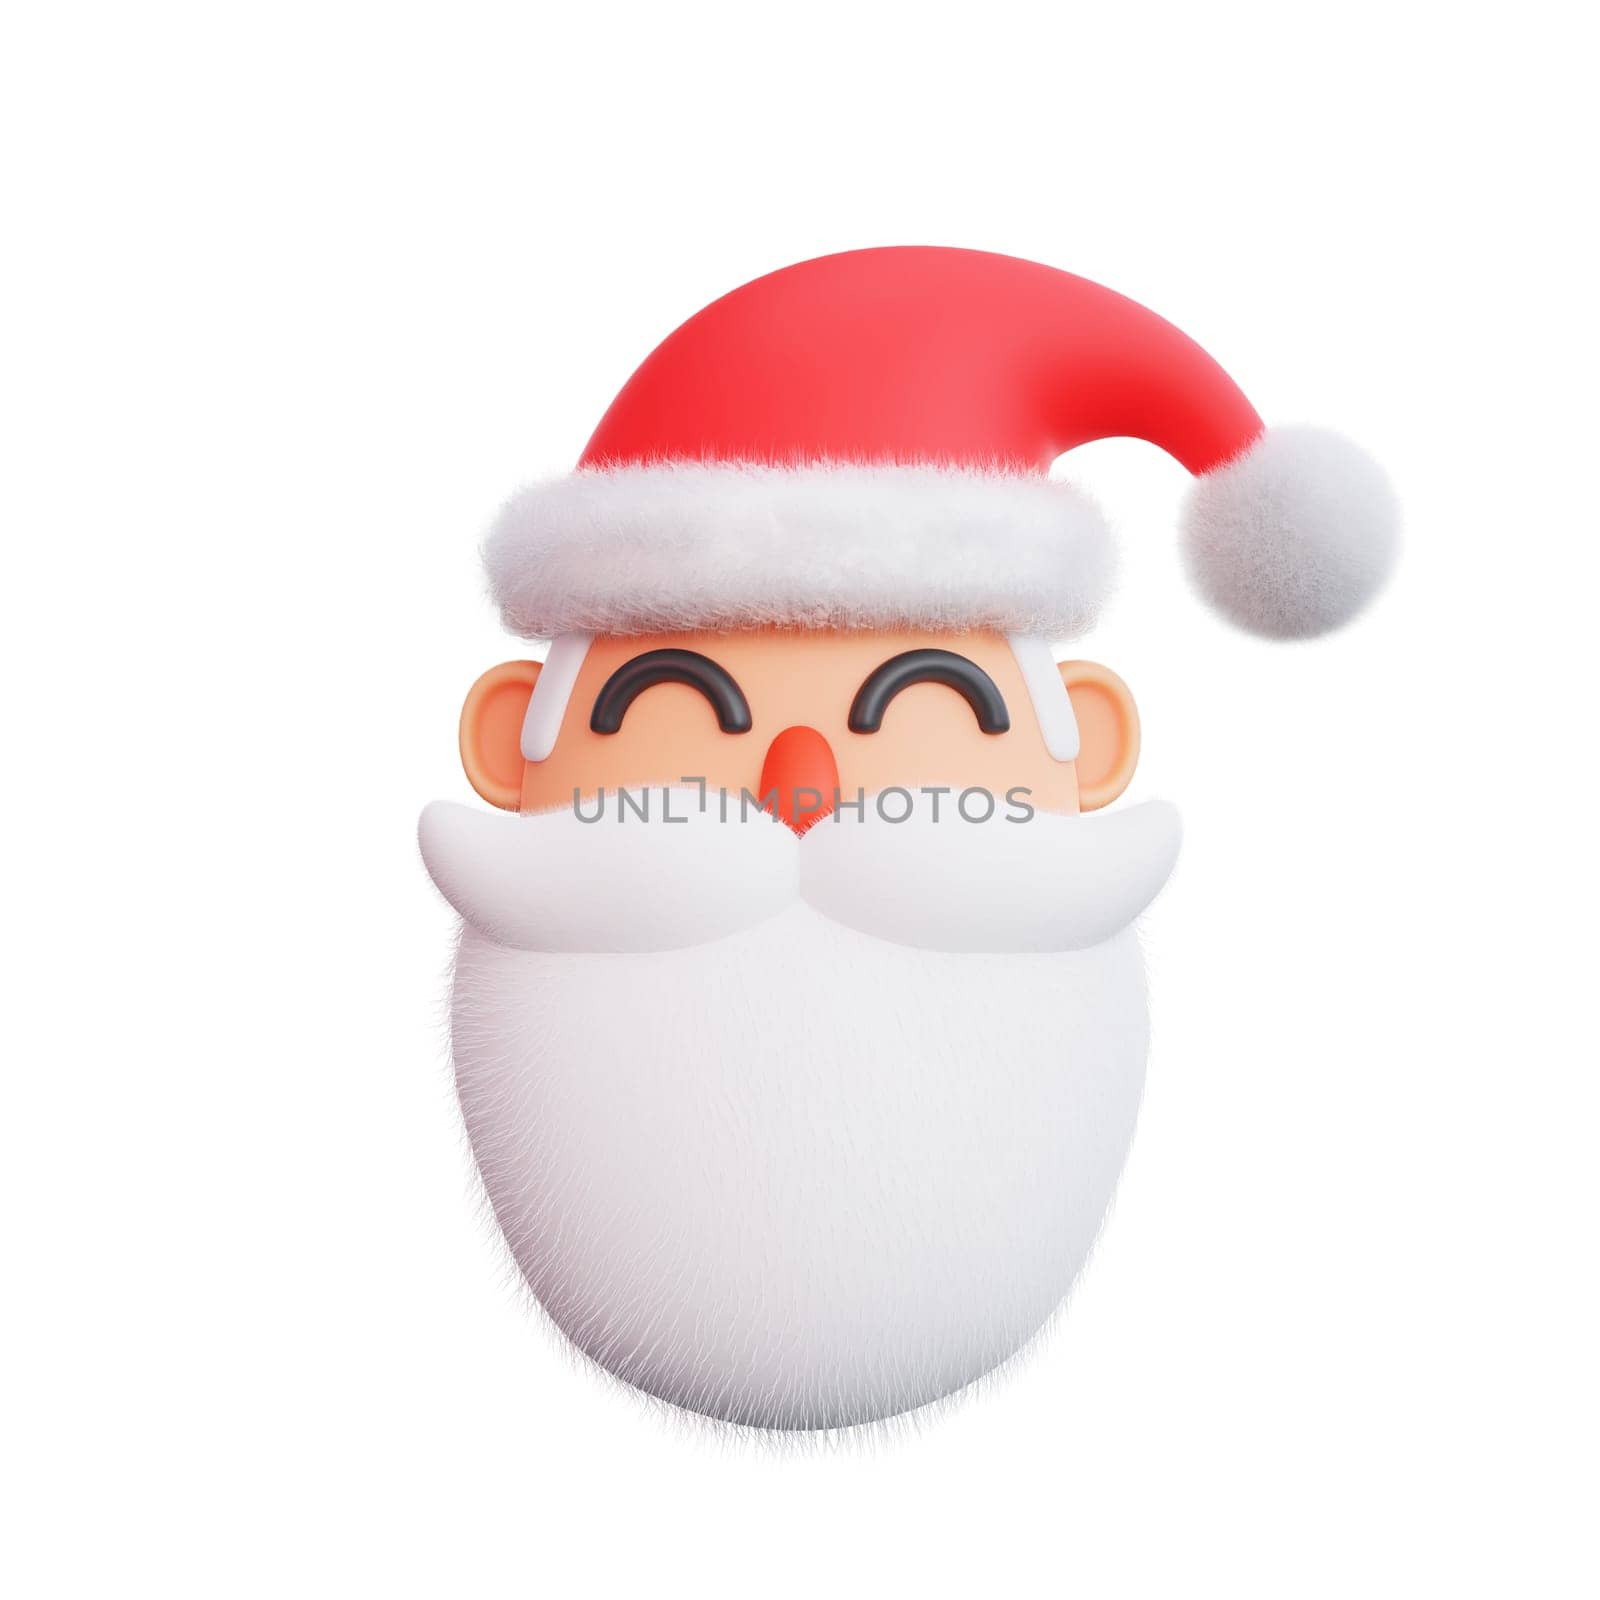 3D illustration of a Christmas santa icon by Rahmat_Djayusman